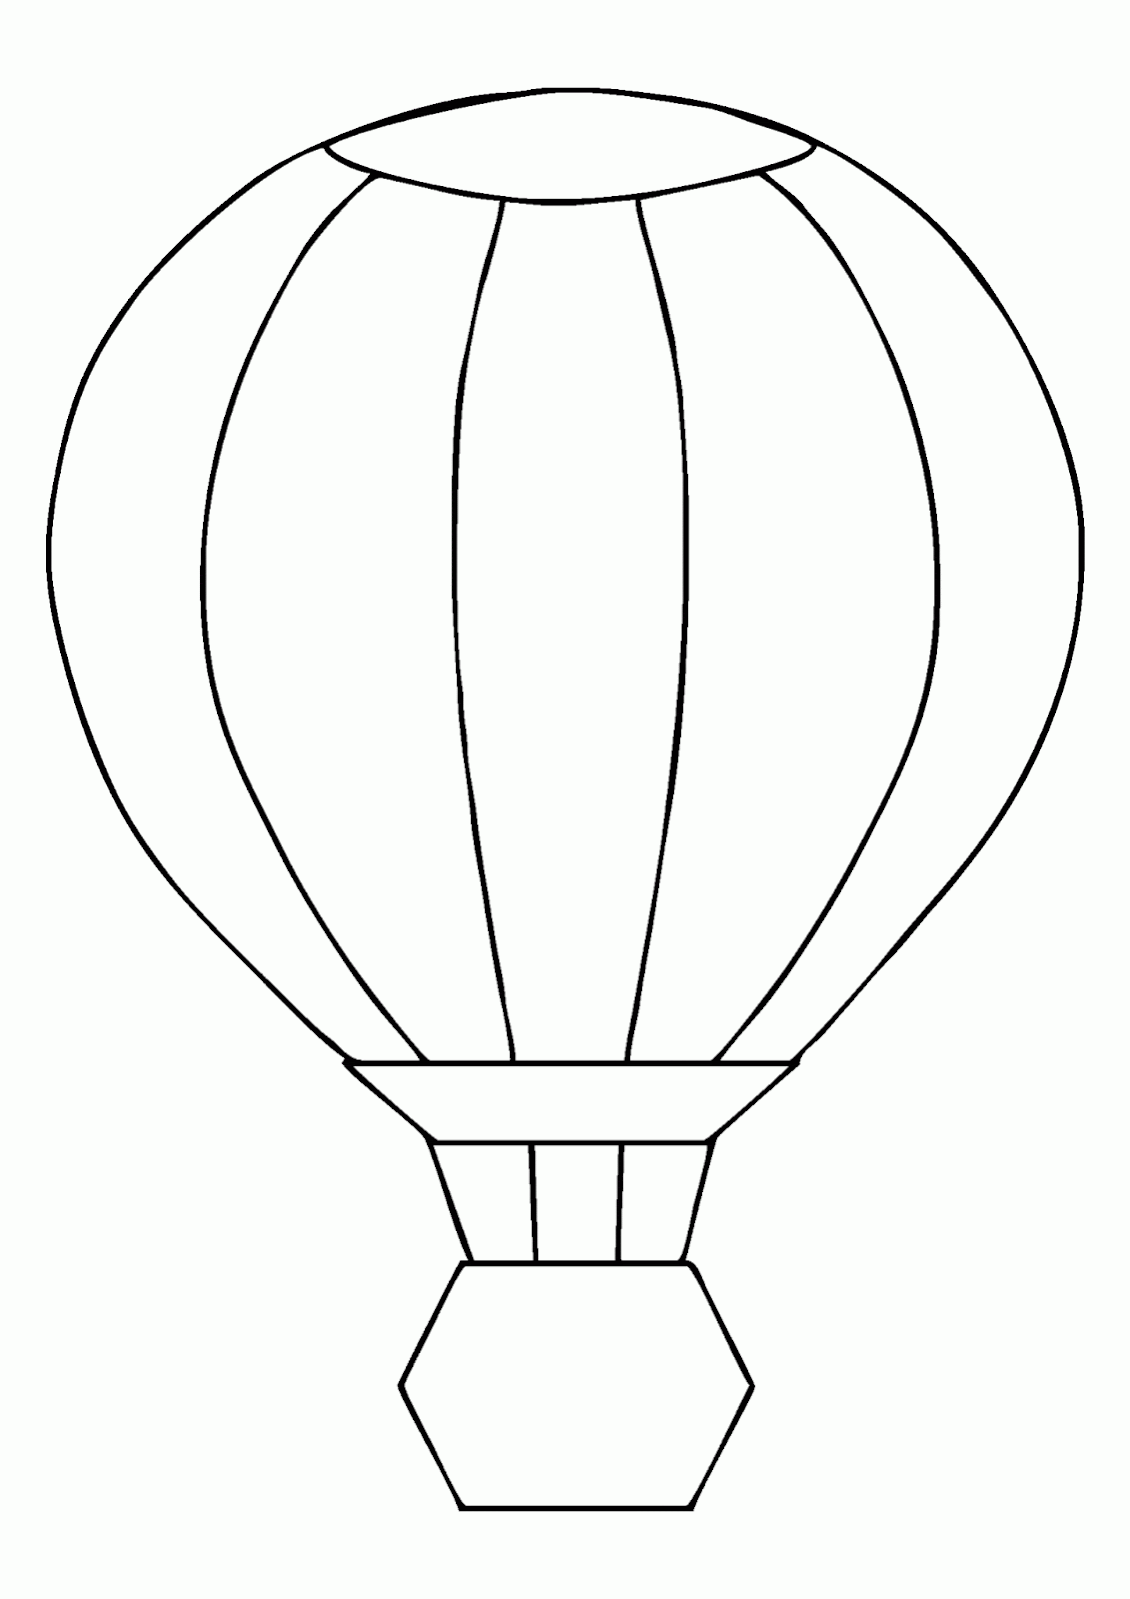 Mewarnai Sketsa Gambar Balon Udara Yang Mudah Digambar Terbaru Kataucap